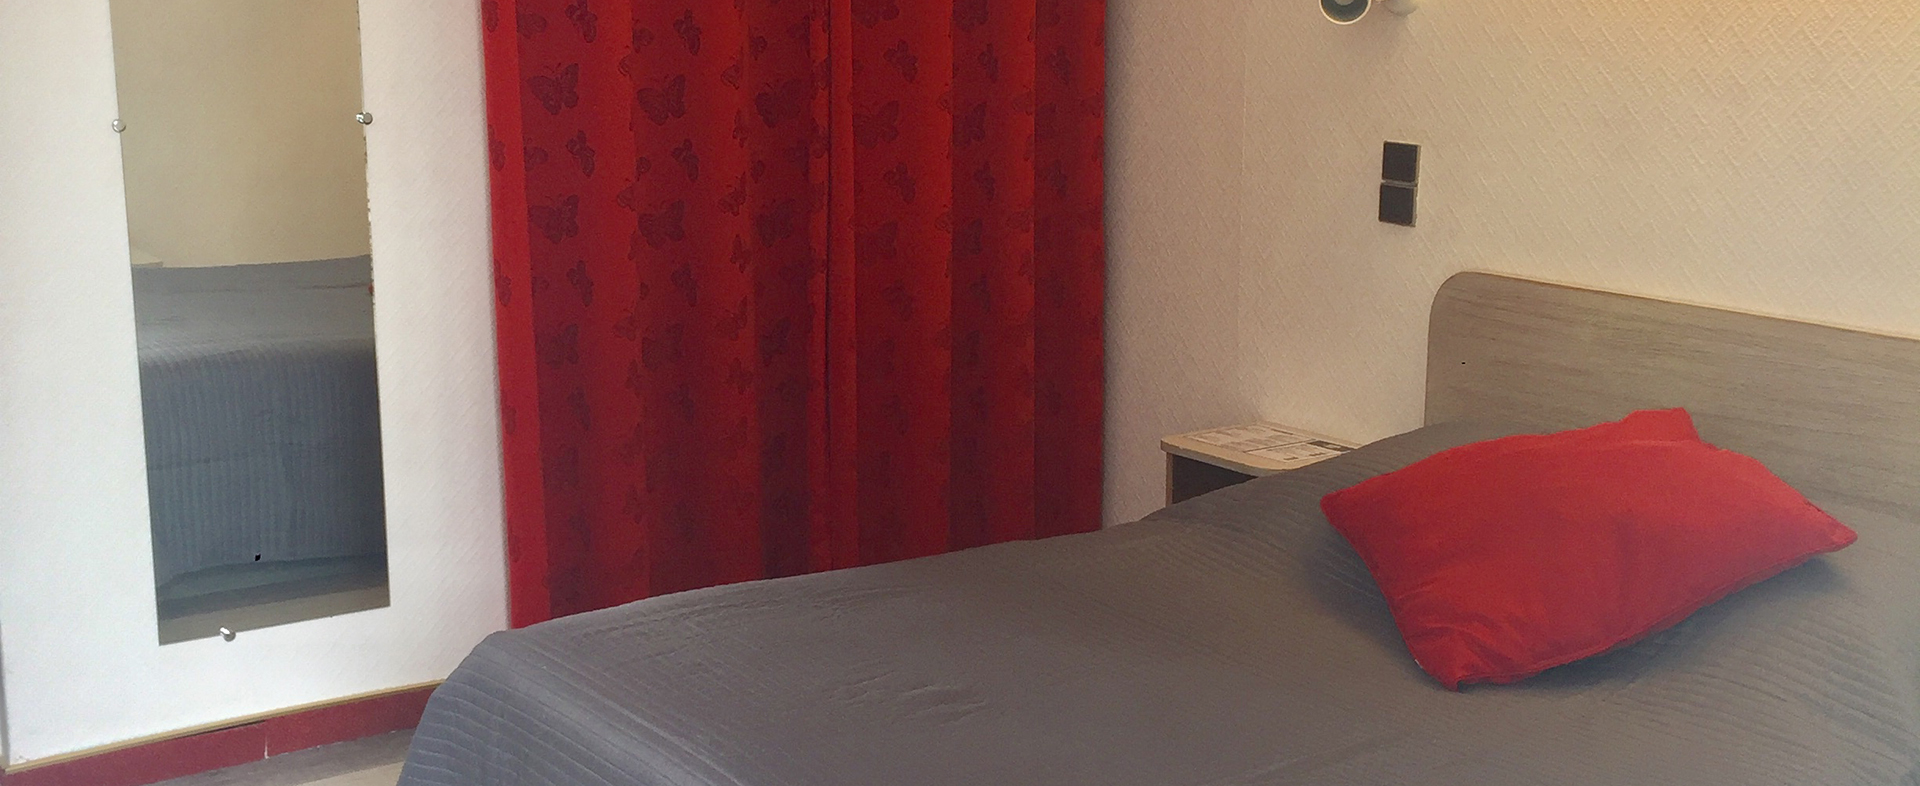 The charming hotel Saint benoit's hotel room, accommodation in Saint Guilhem le désert